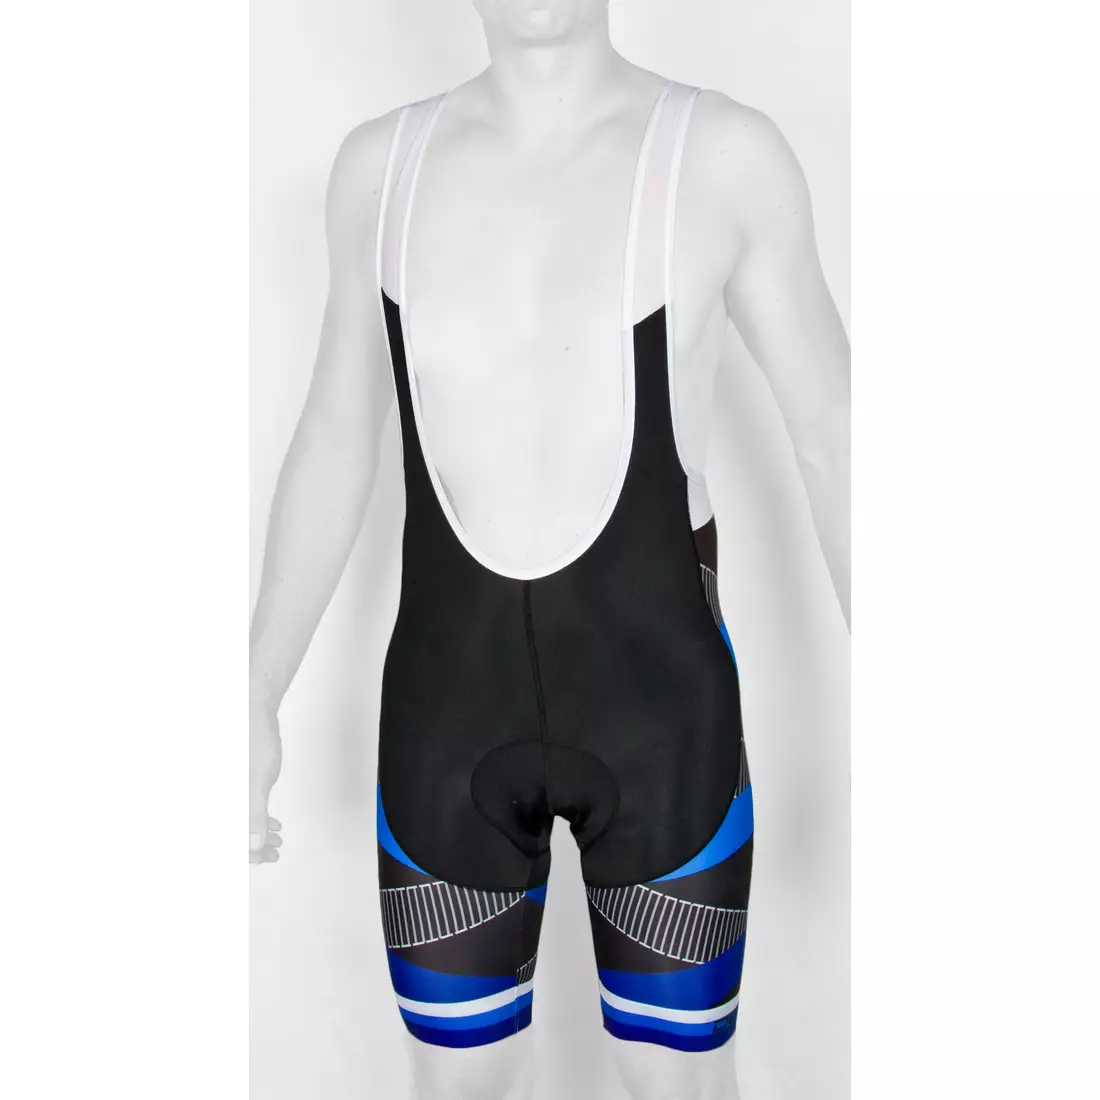 DEKO STRIP bib shorts, black and blue